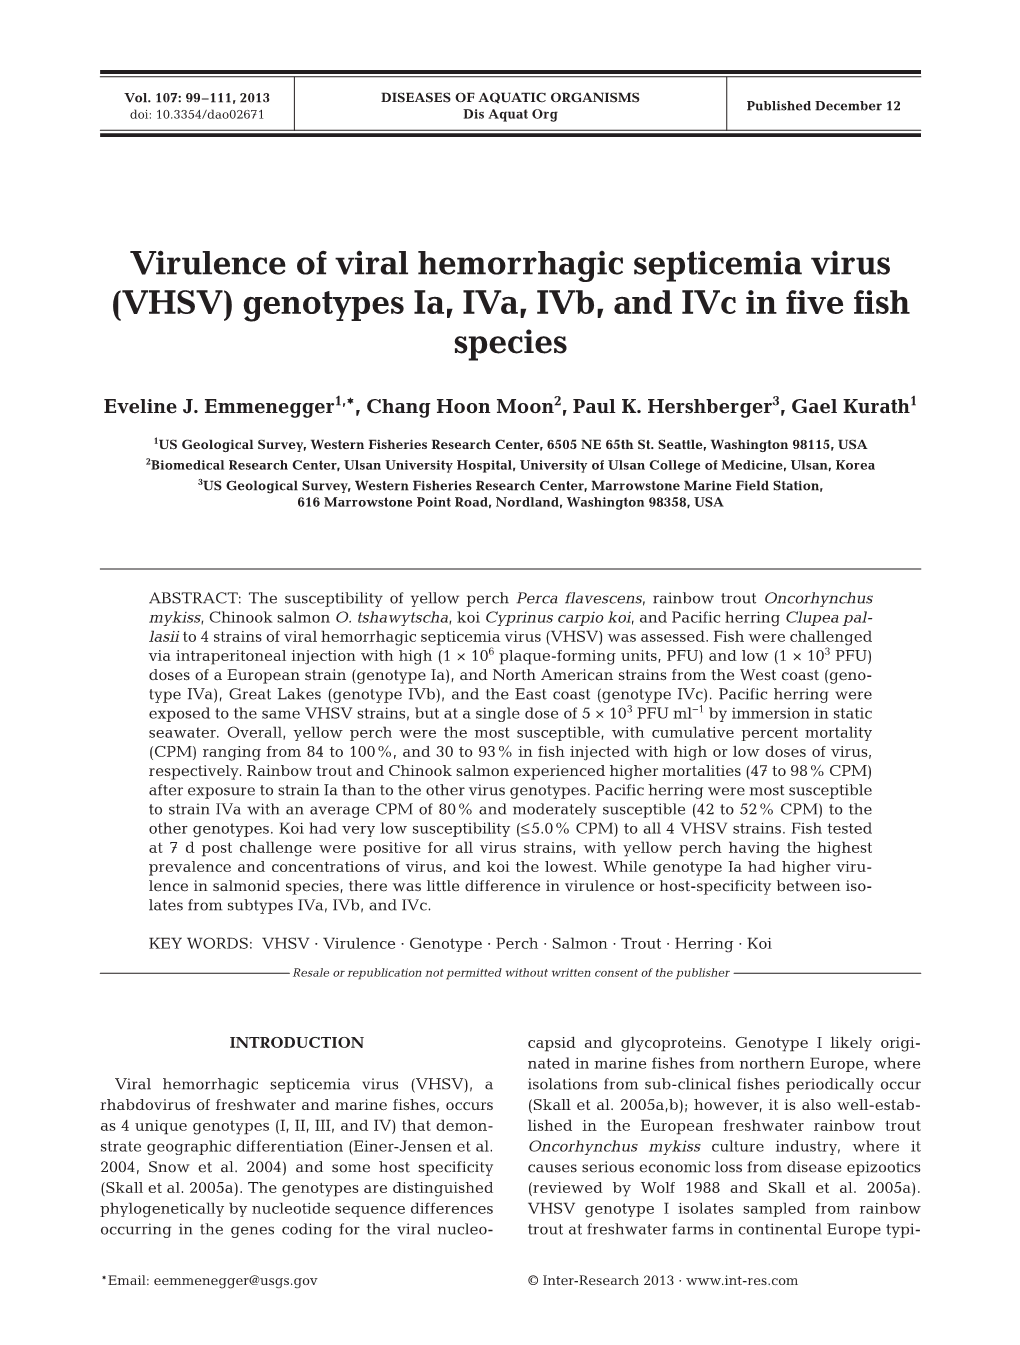 Virulence of Viral Hemorrhagic Septicemia Virus (VHSV) Genotypes Ia, Iva, Ivb, and Ivc in Five Fish Species